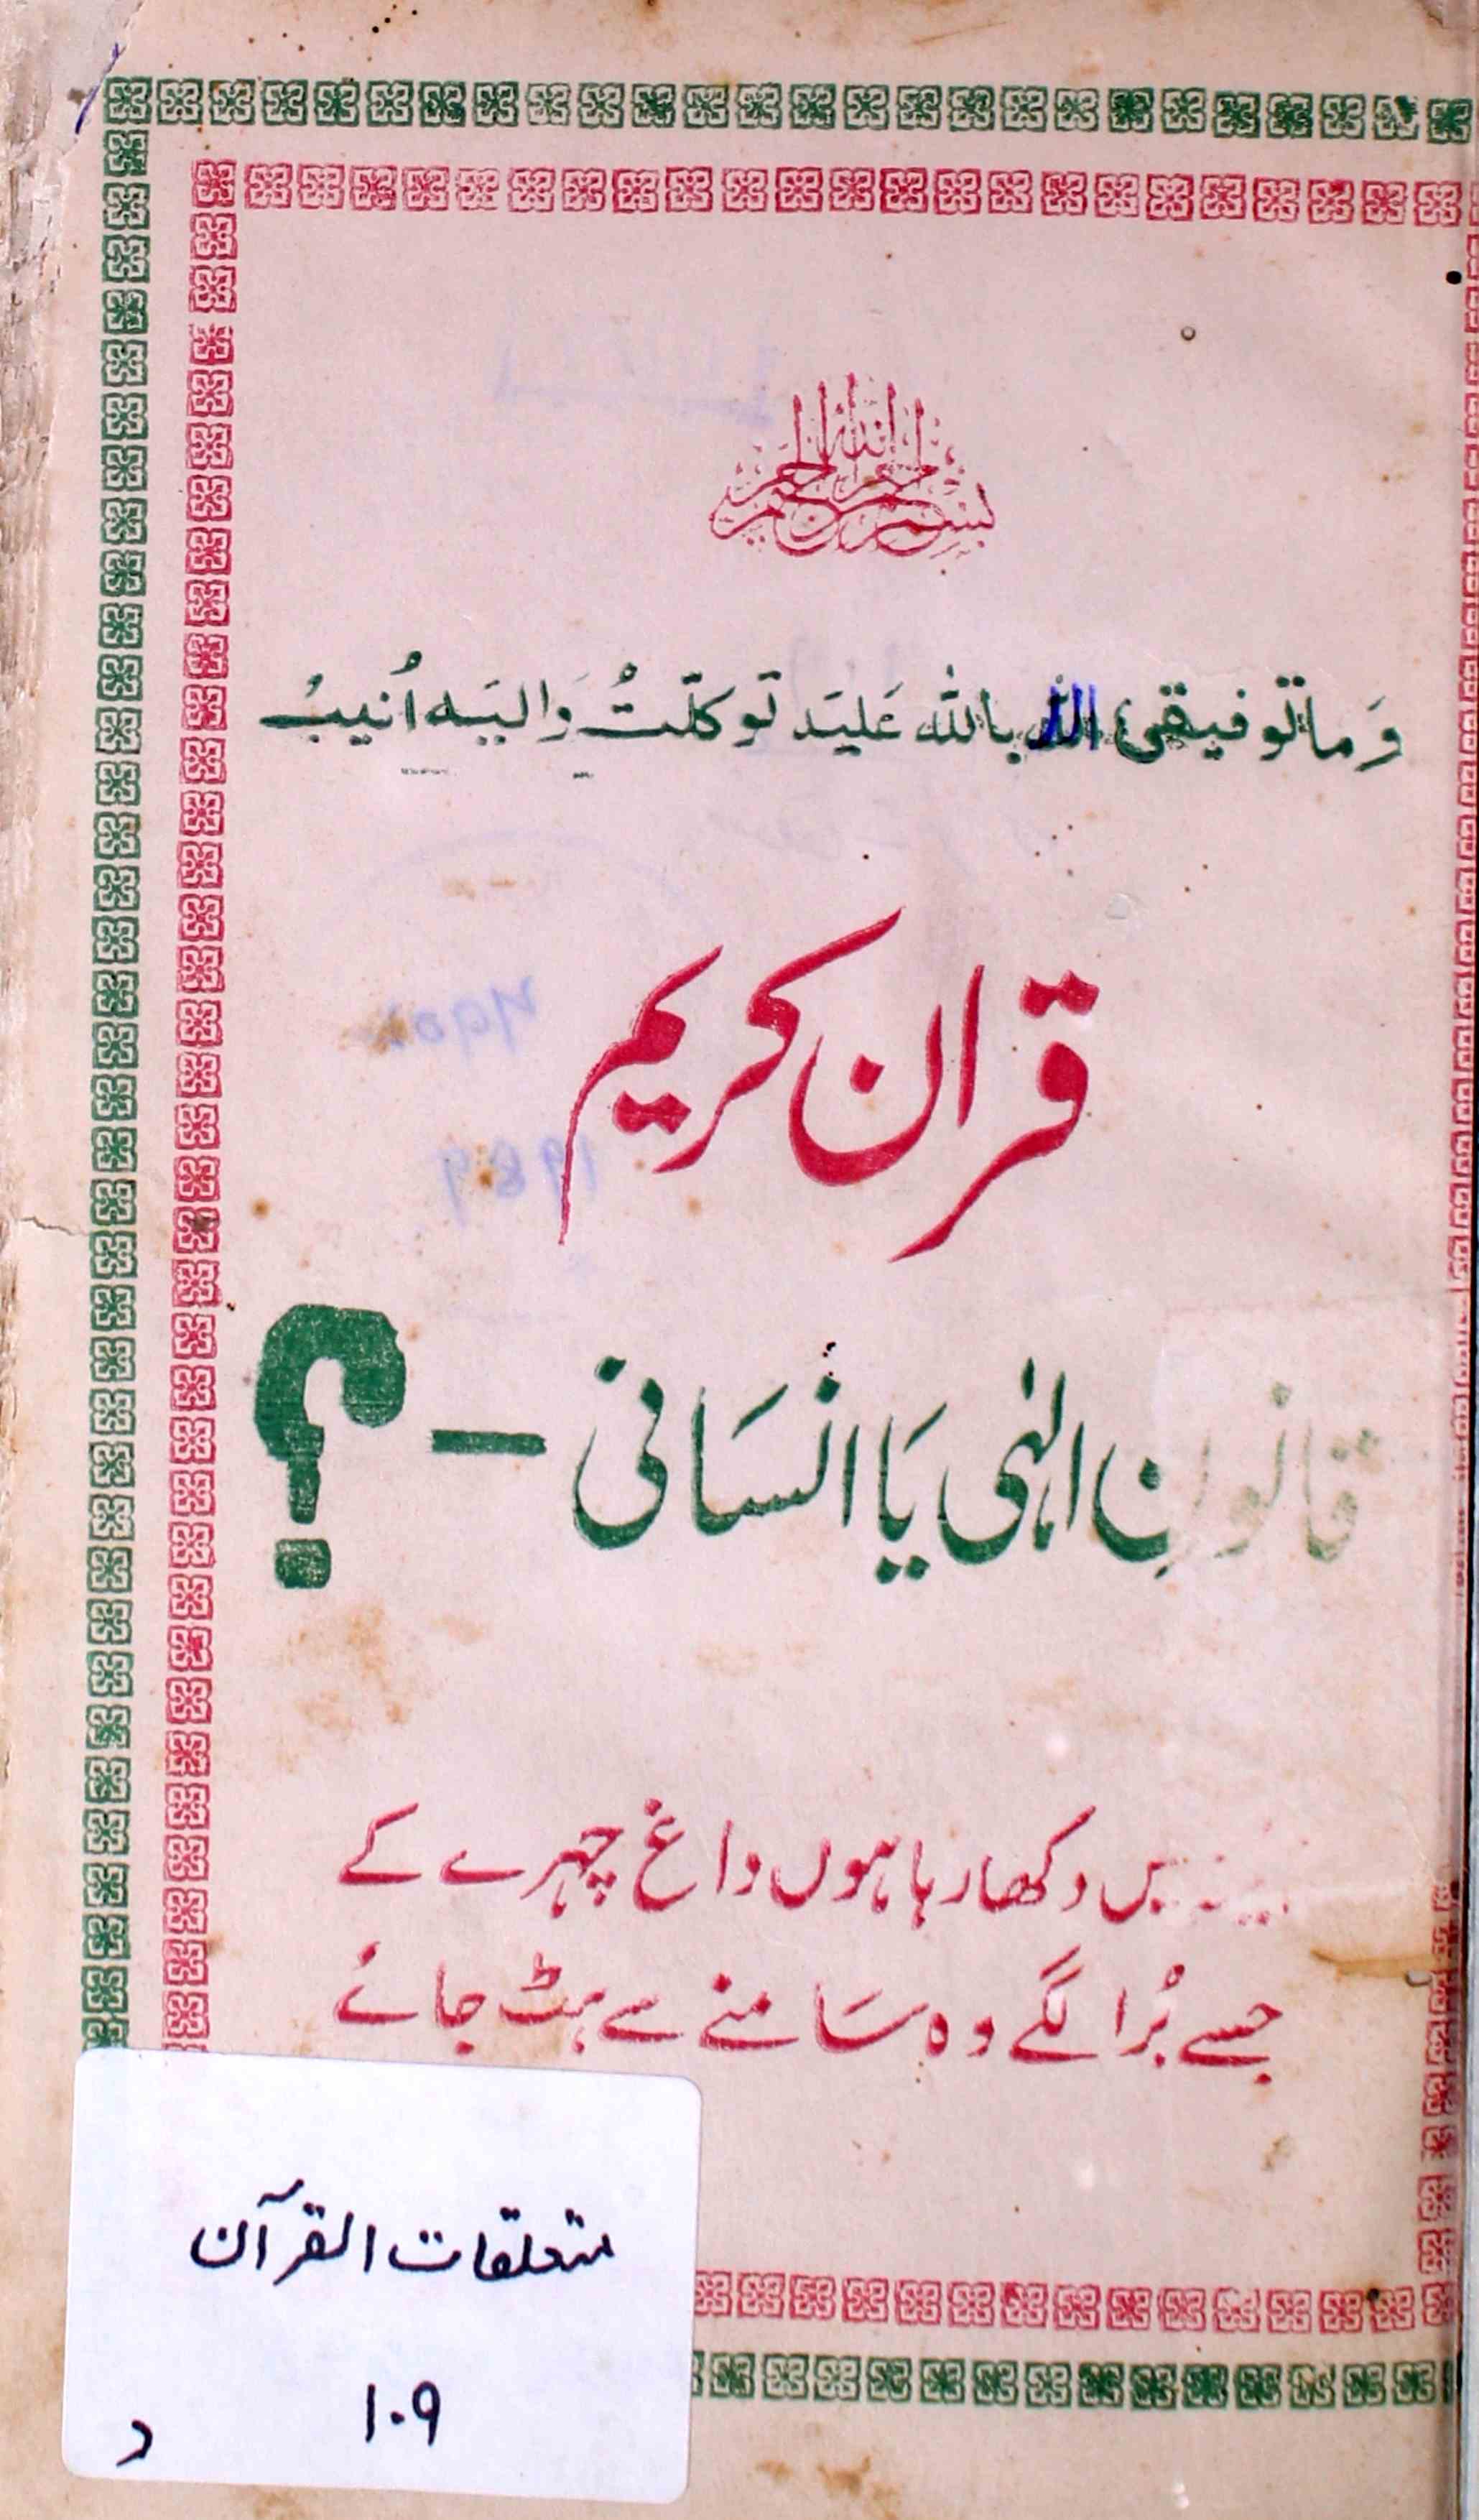 Quran-e-Kareem Qanoon-e-Ilahi Ya Insani?